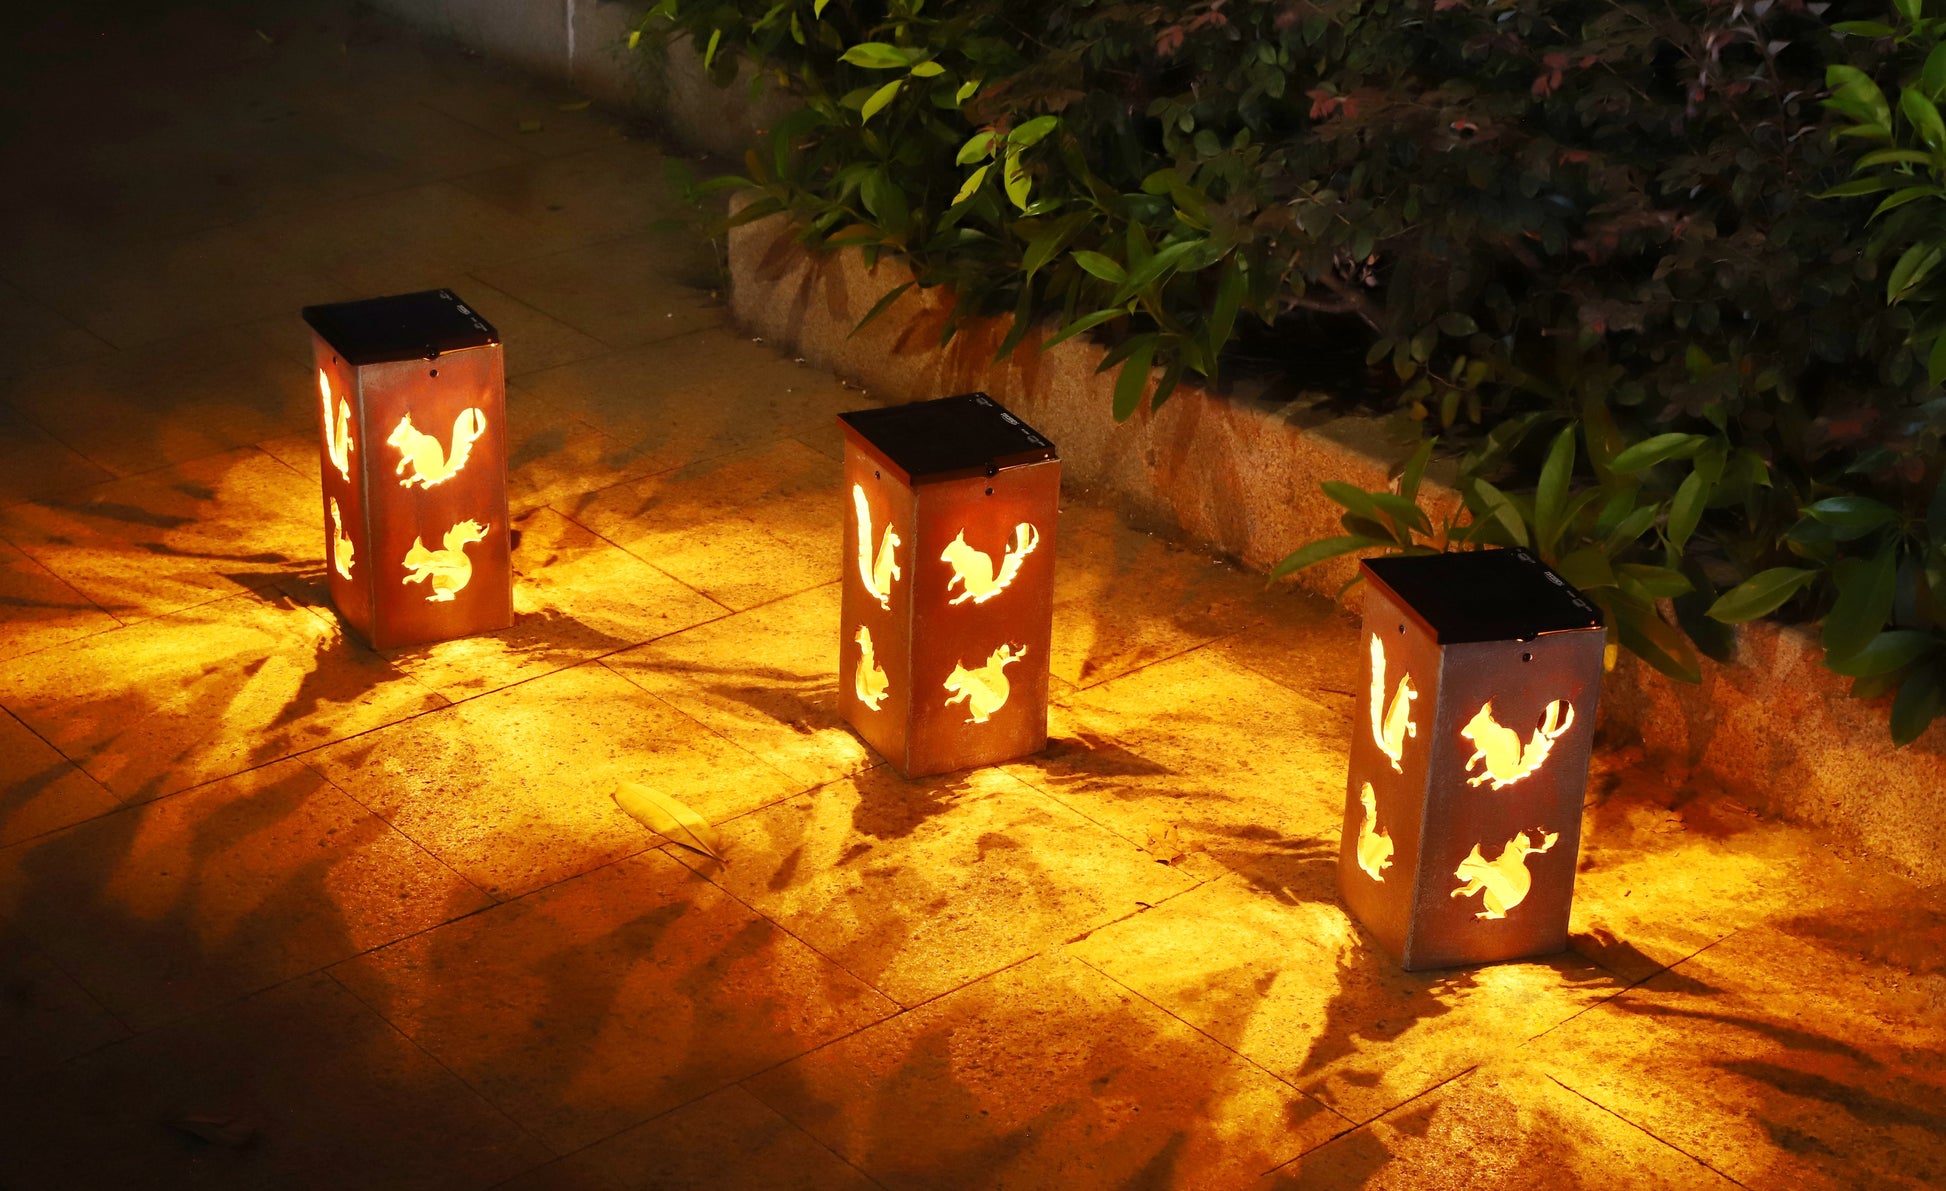 8 LED Solar Portable Outdoor Lantern with Flame - Techko Maid